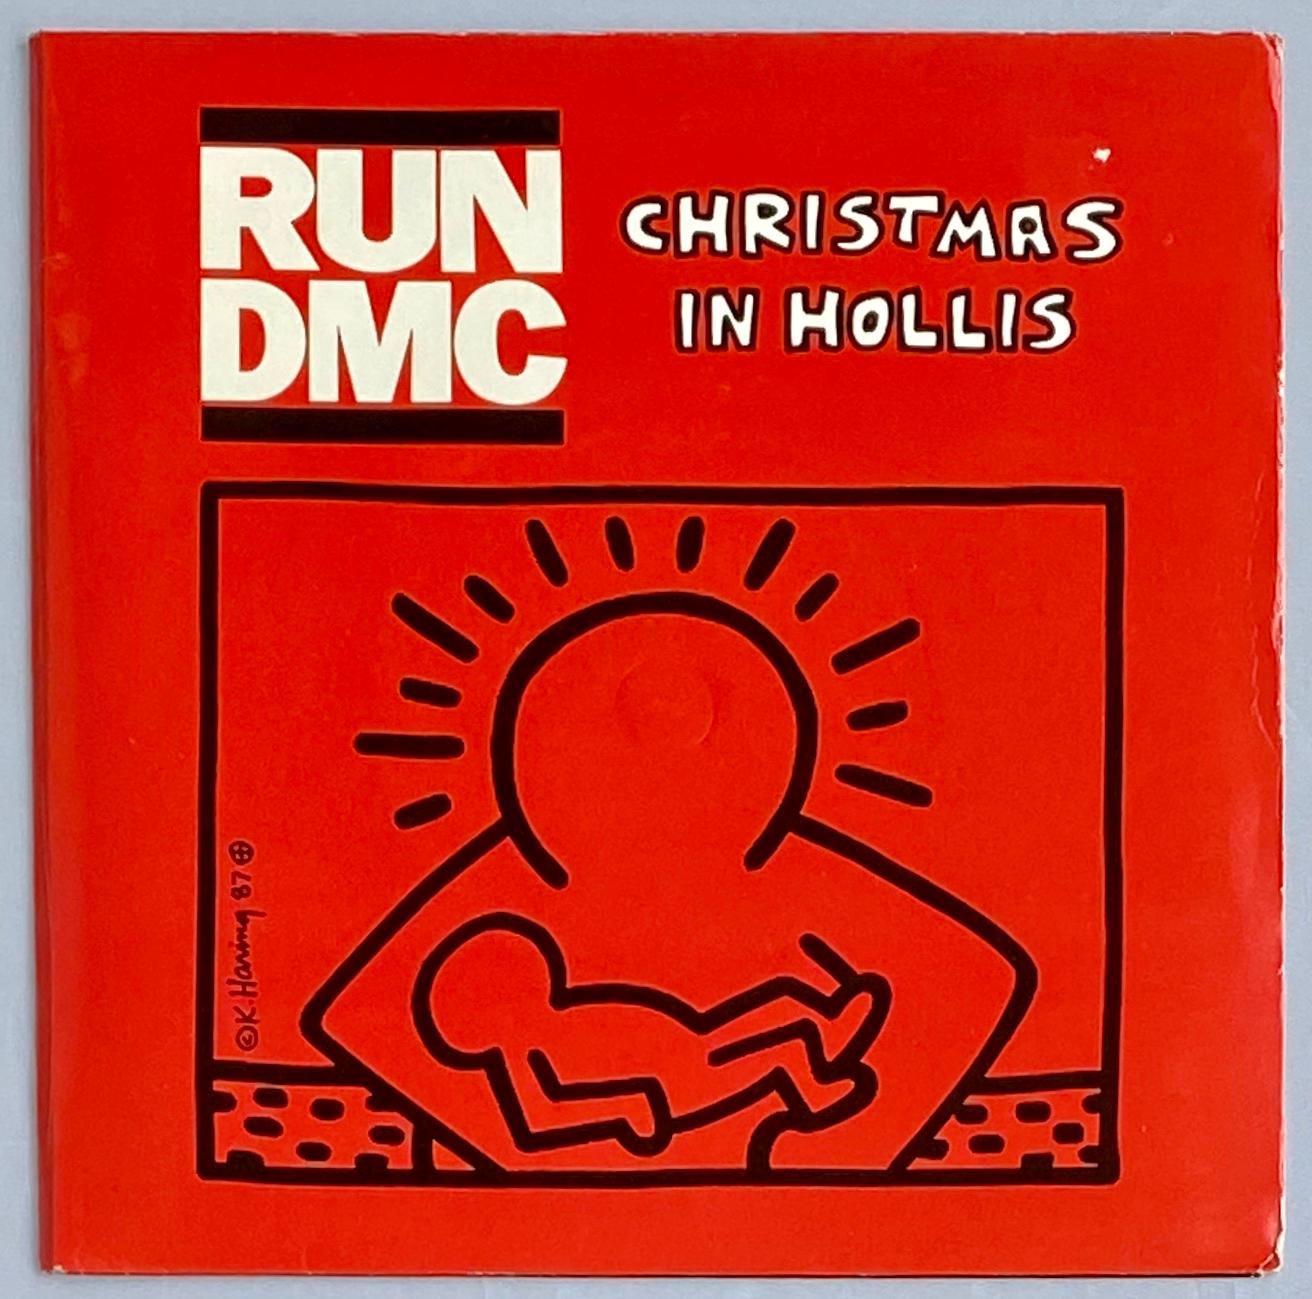 Keith Haring, Run DMC Christmas:
Run DMC 